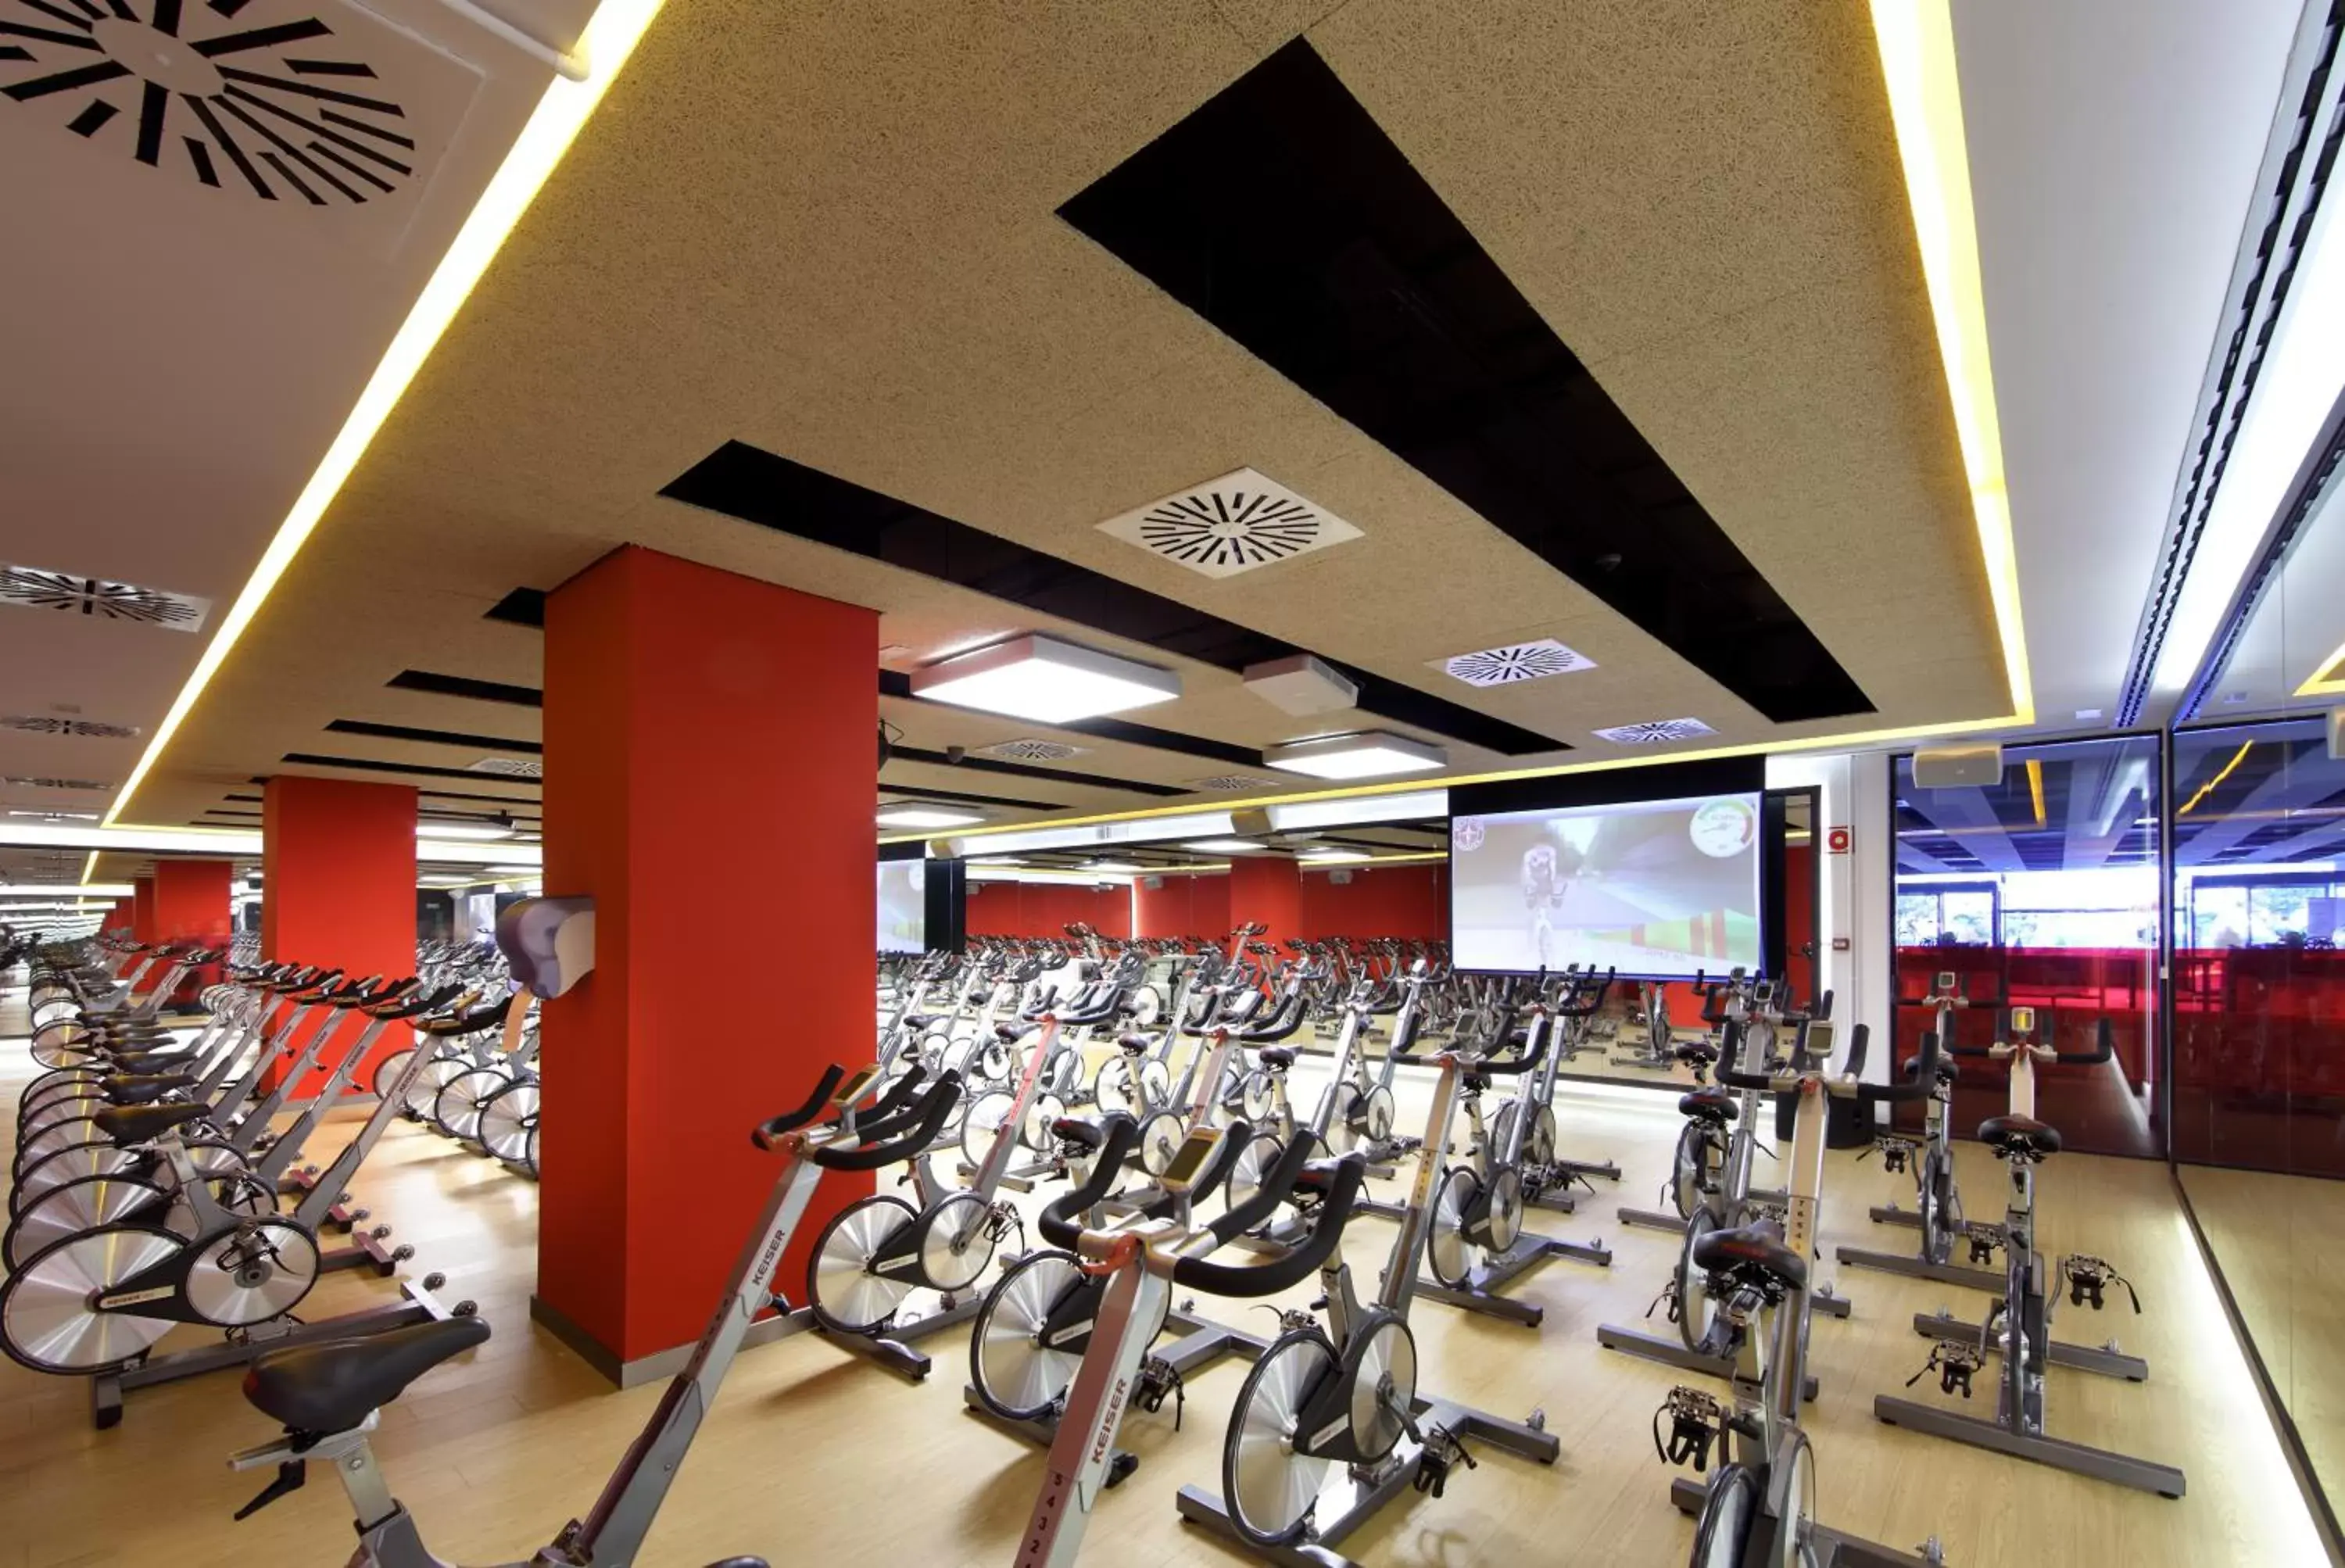 Fitness centre/facilities, Fitness Center/Facilities in Occidental Bilbao